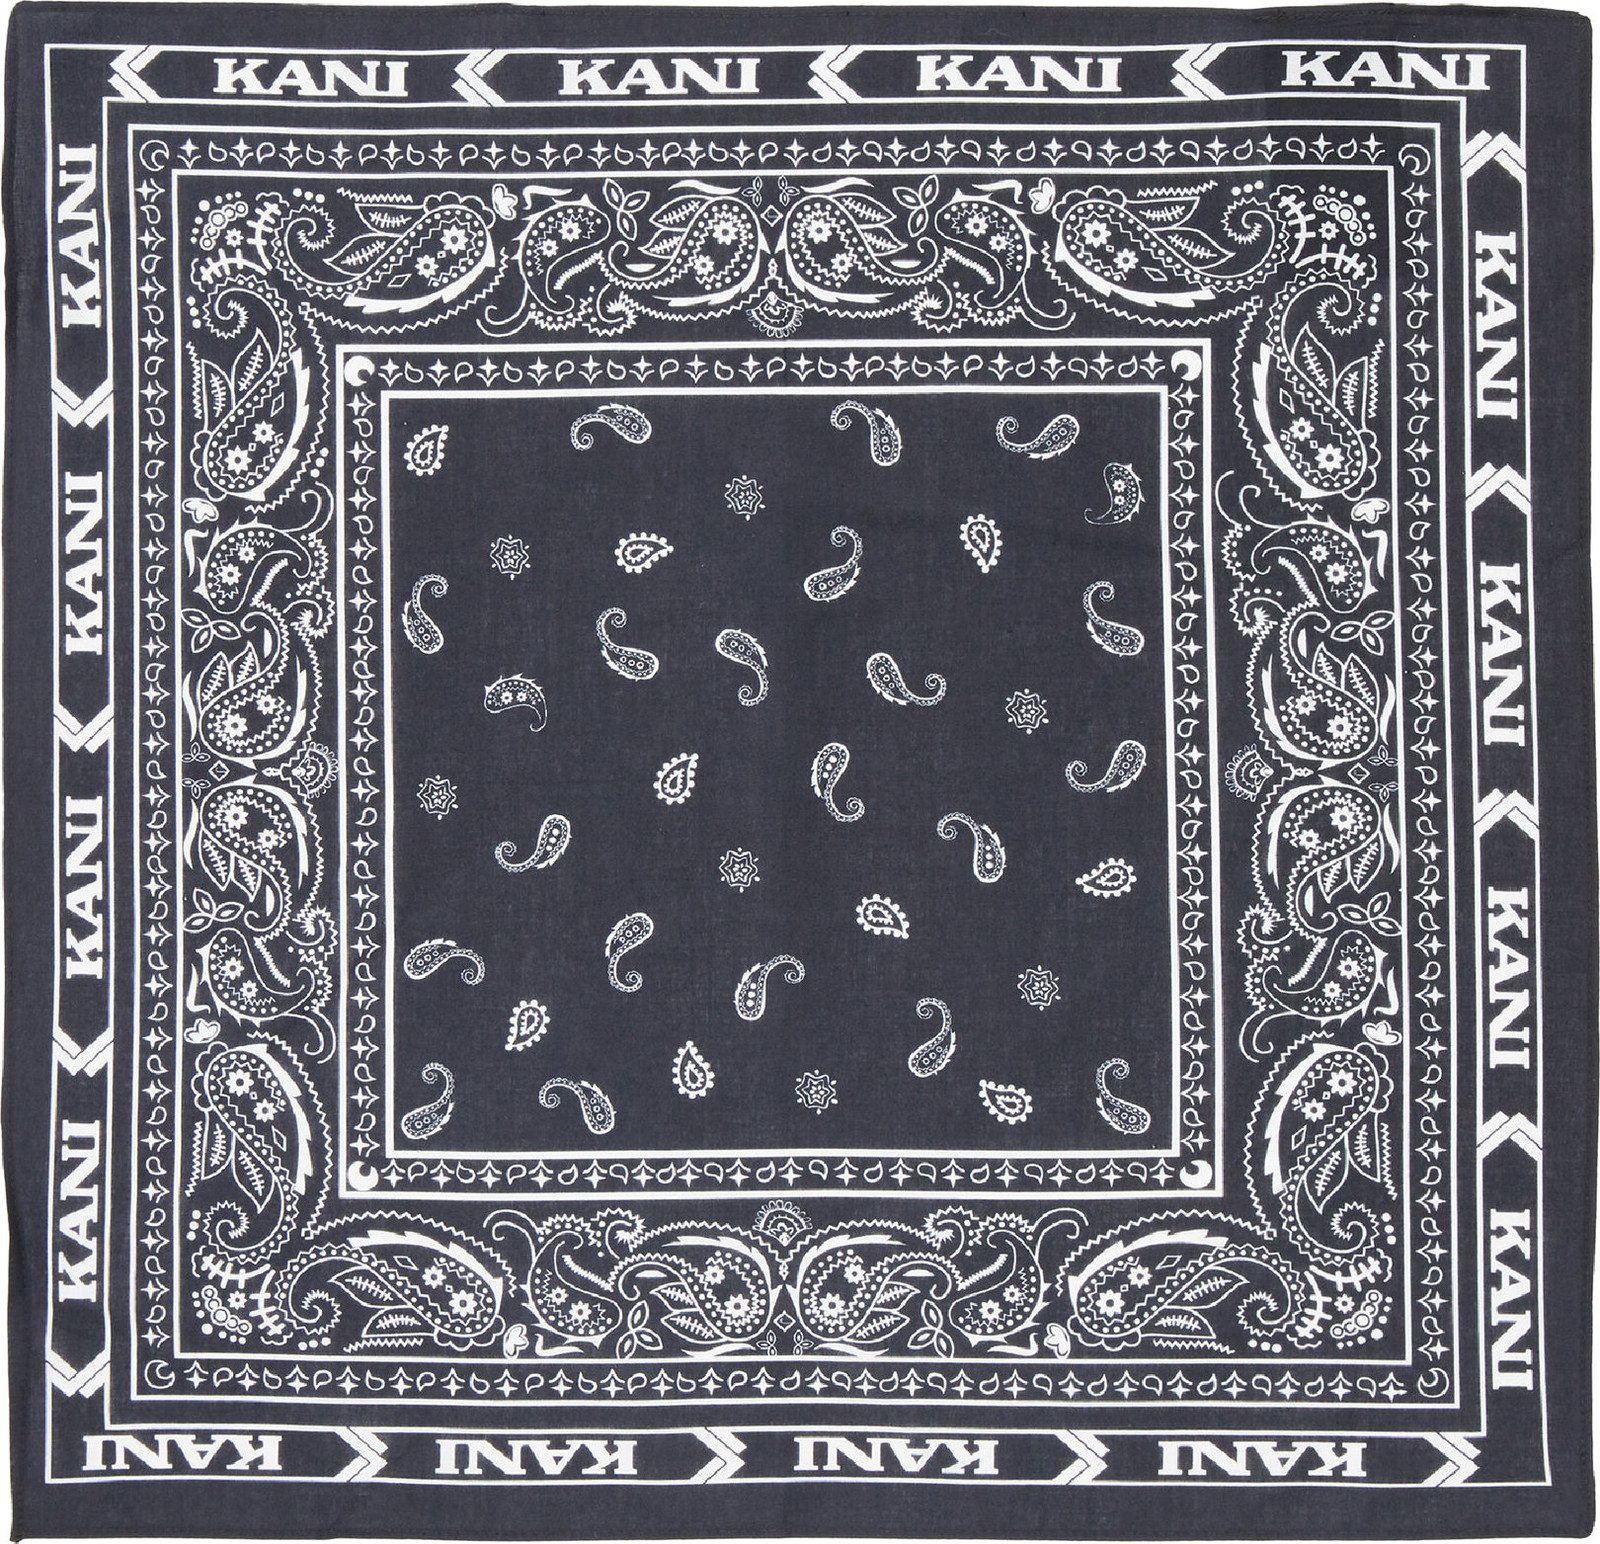 Šátek Karl Kani KA241-010-1 RED/SAND/BLUEkolo